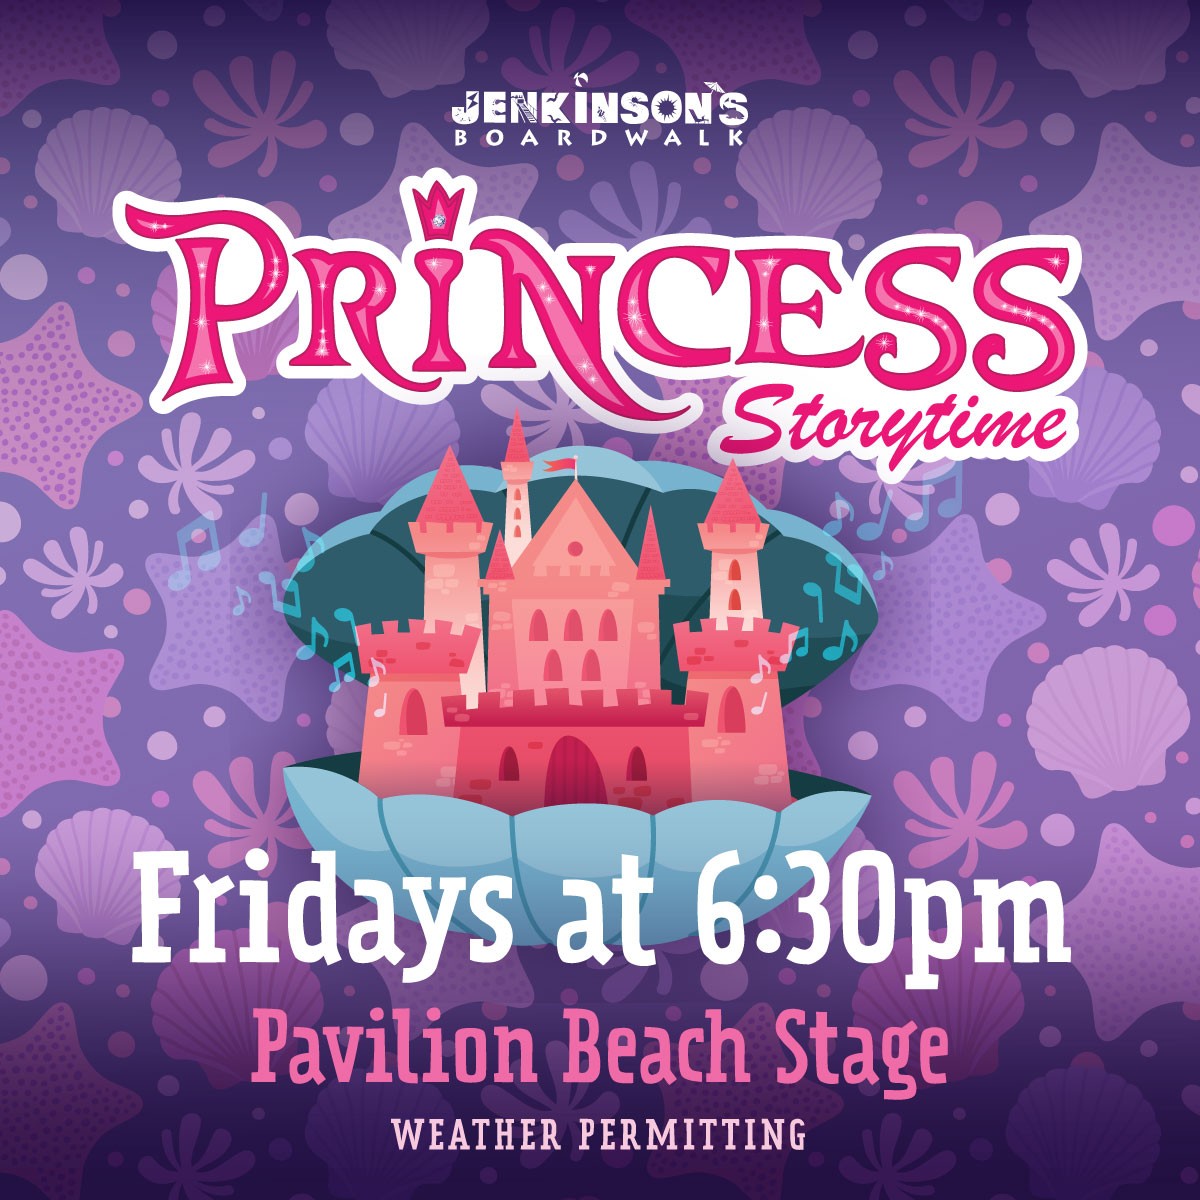 princess storytime at jenkinson's boardwalk on fridays at 6:30 this summer